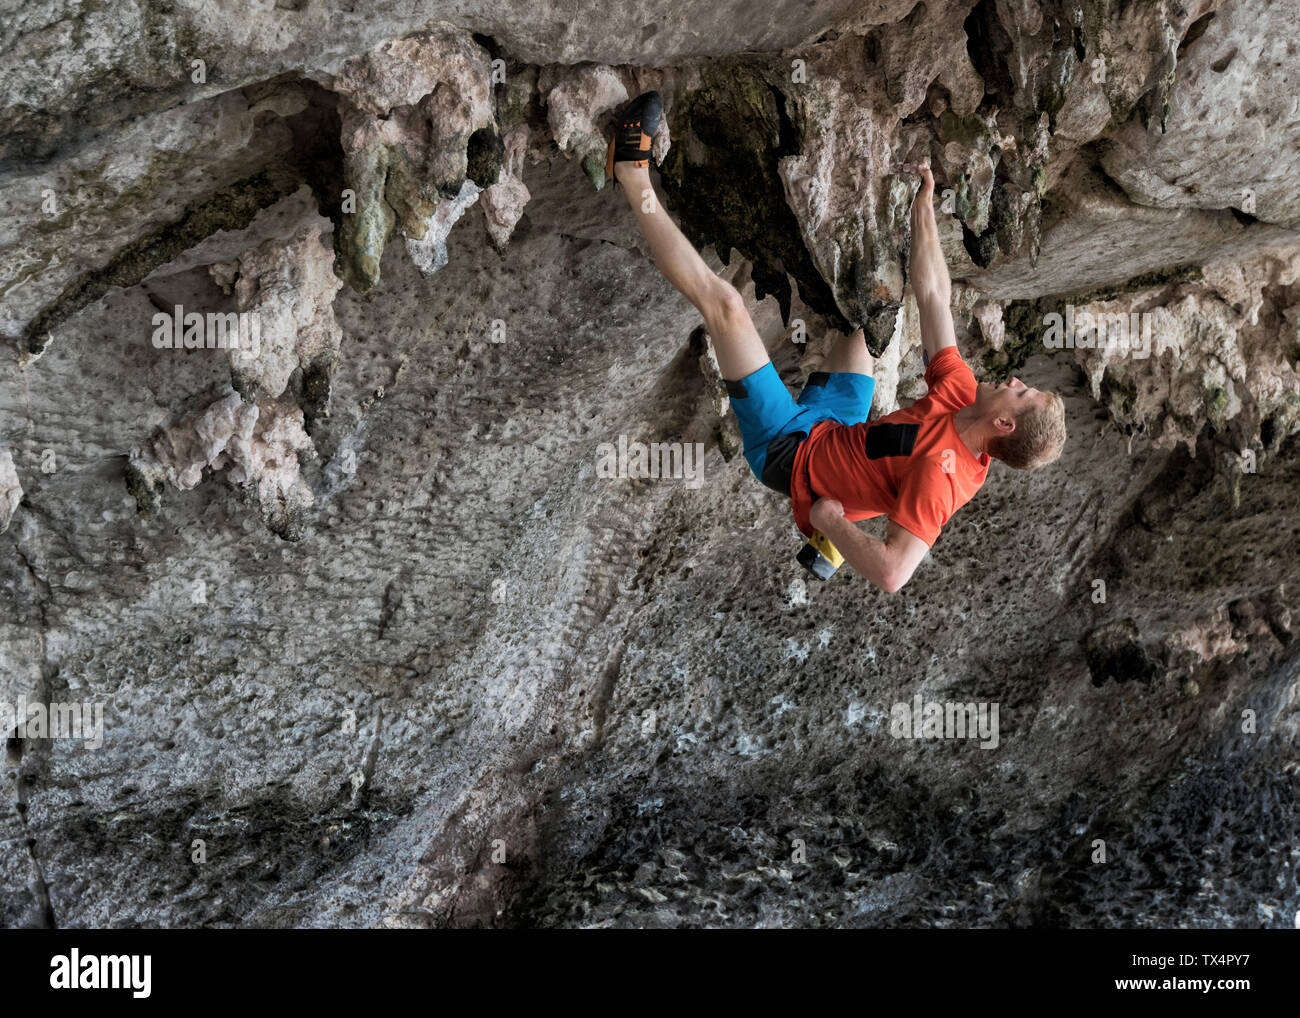 Thailand, Krabi, Lao liang island, man bouldering in rock wall Stock Photo